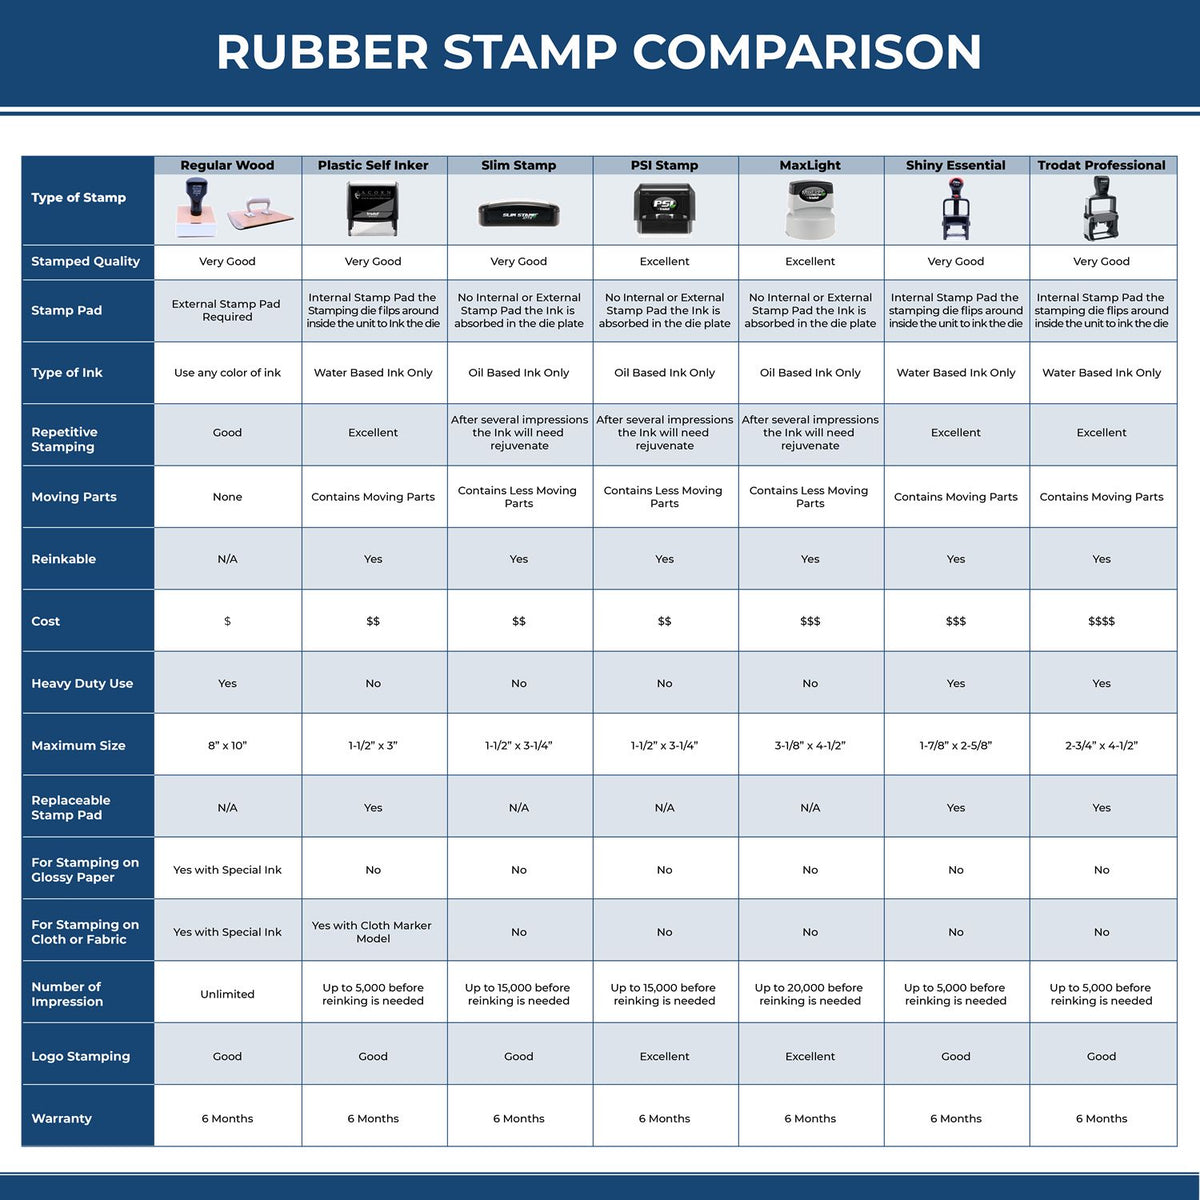 Legal Damages Rubber Stamp 4301R Rubber Stamp Comparison